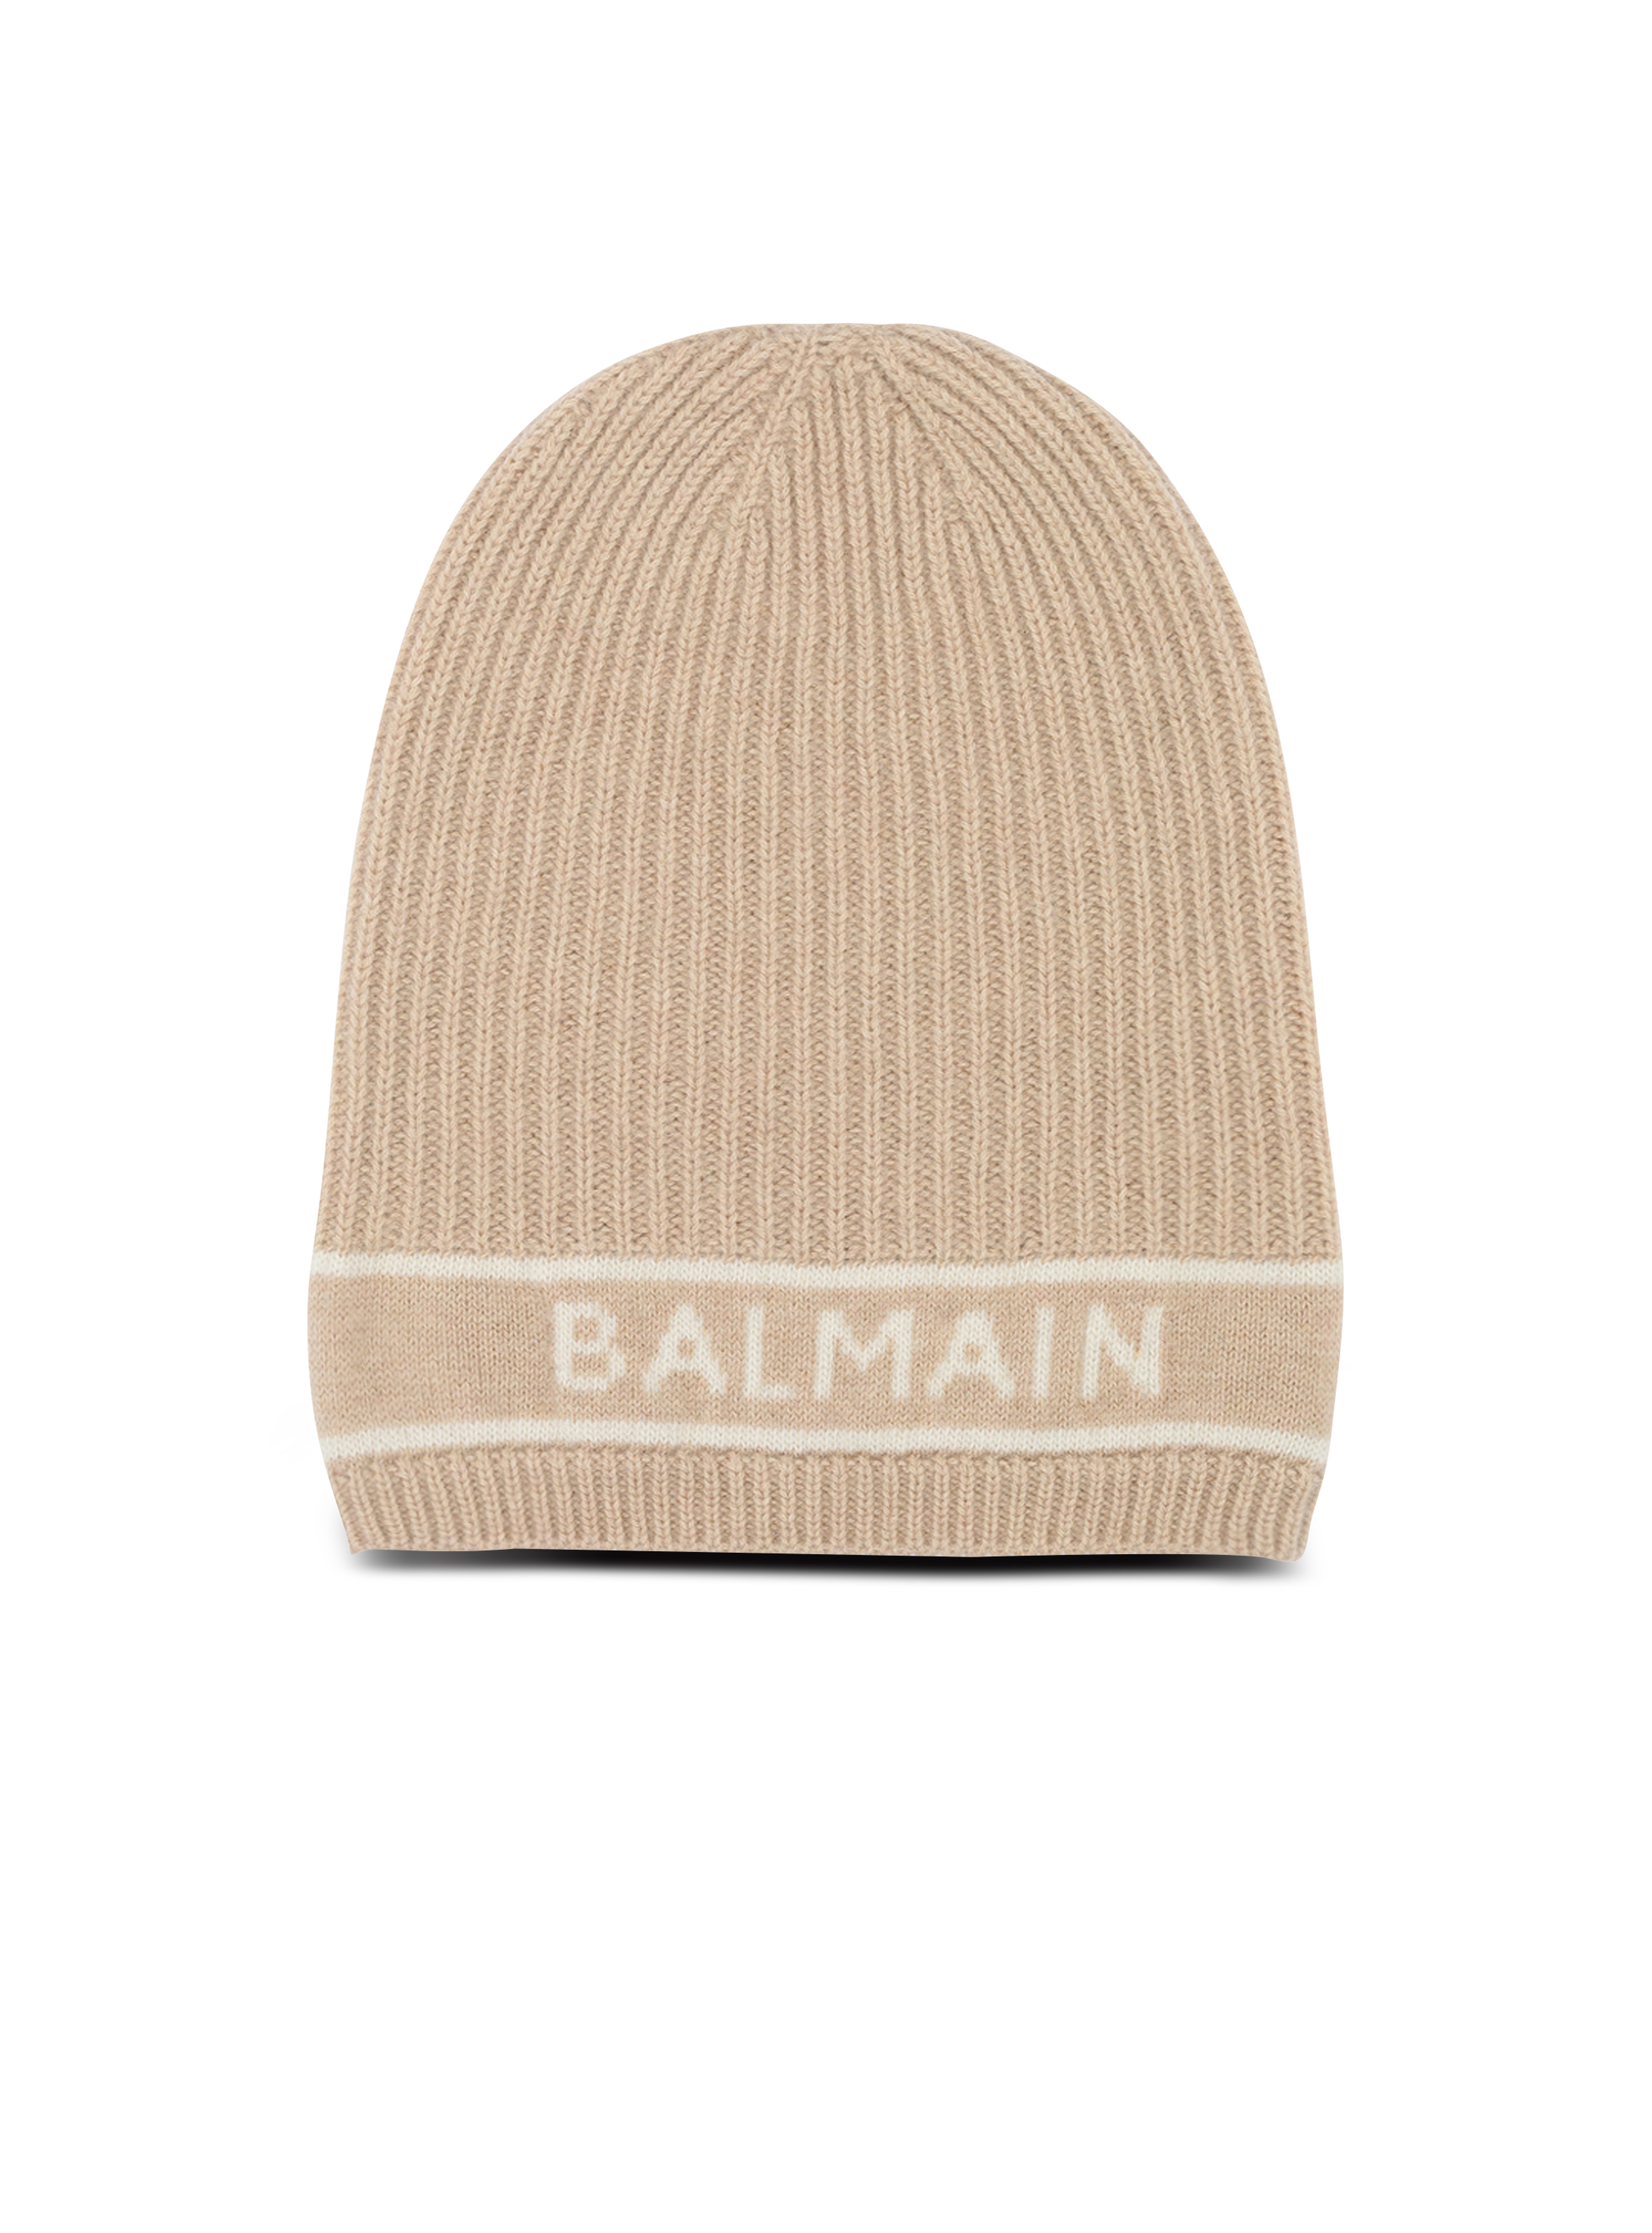 Wool beanie with embroidered Balmain logo, beige